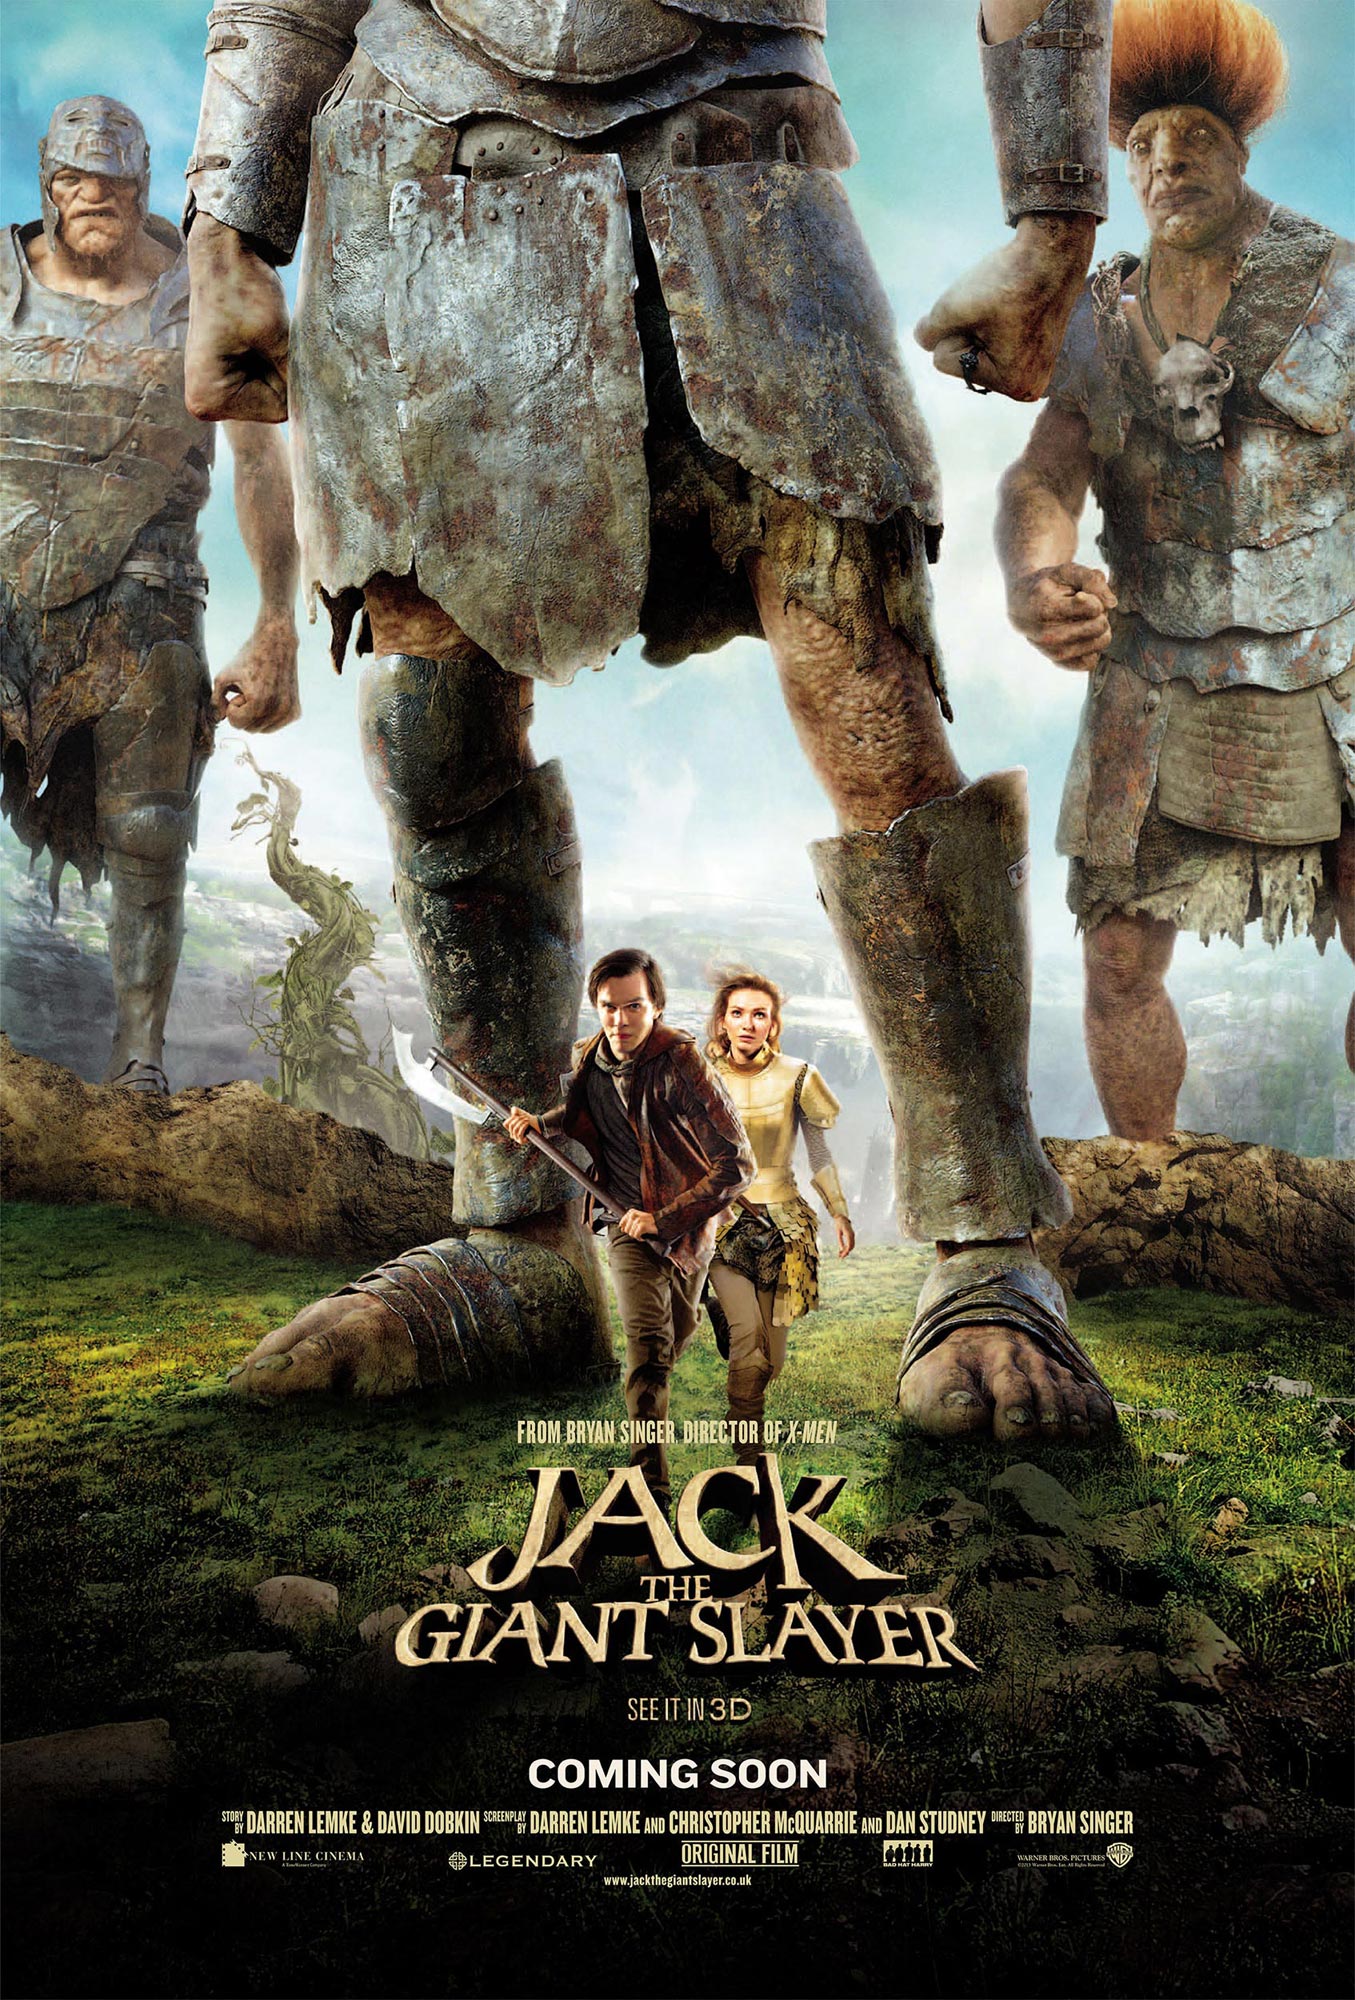 http://www.filmofilia.com/wp-content/uploads/2013/02/Jack-the-Giant-Slayer-Poster.jpg